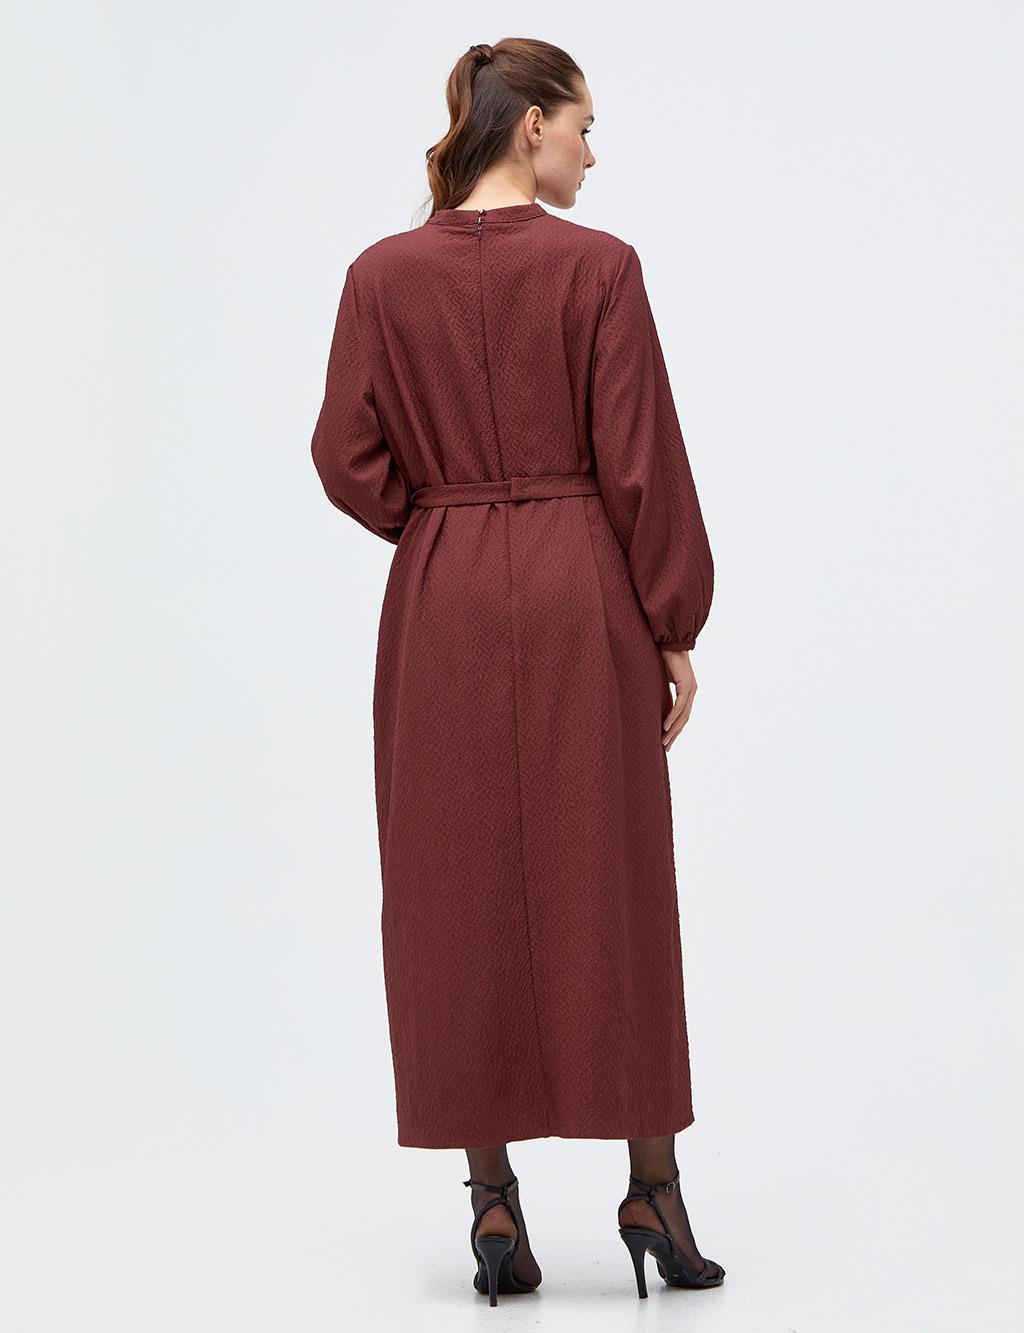 Embossed Patterned Belted Dress Bronze Brown